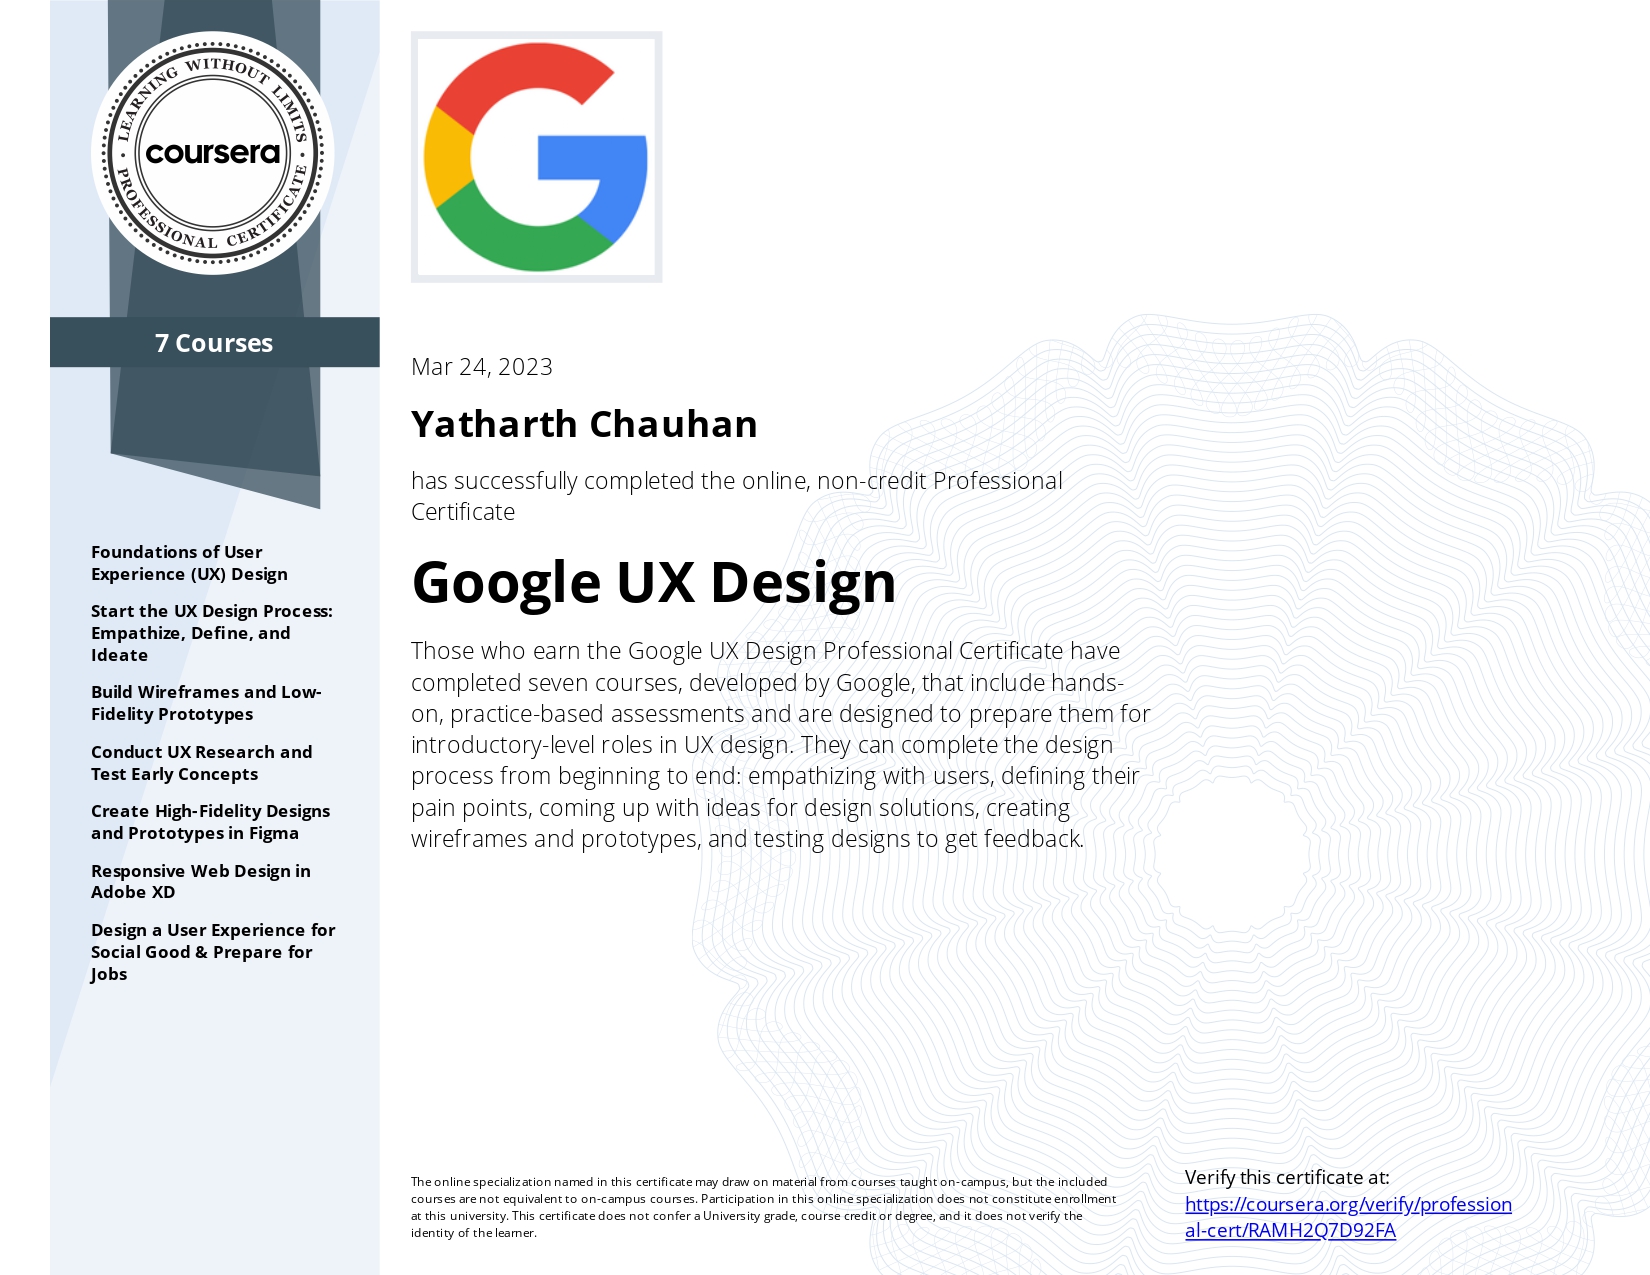 Google Certified: UX Design Google Specialization